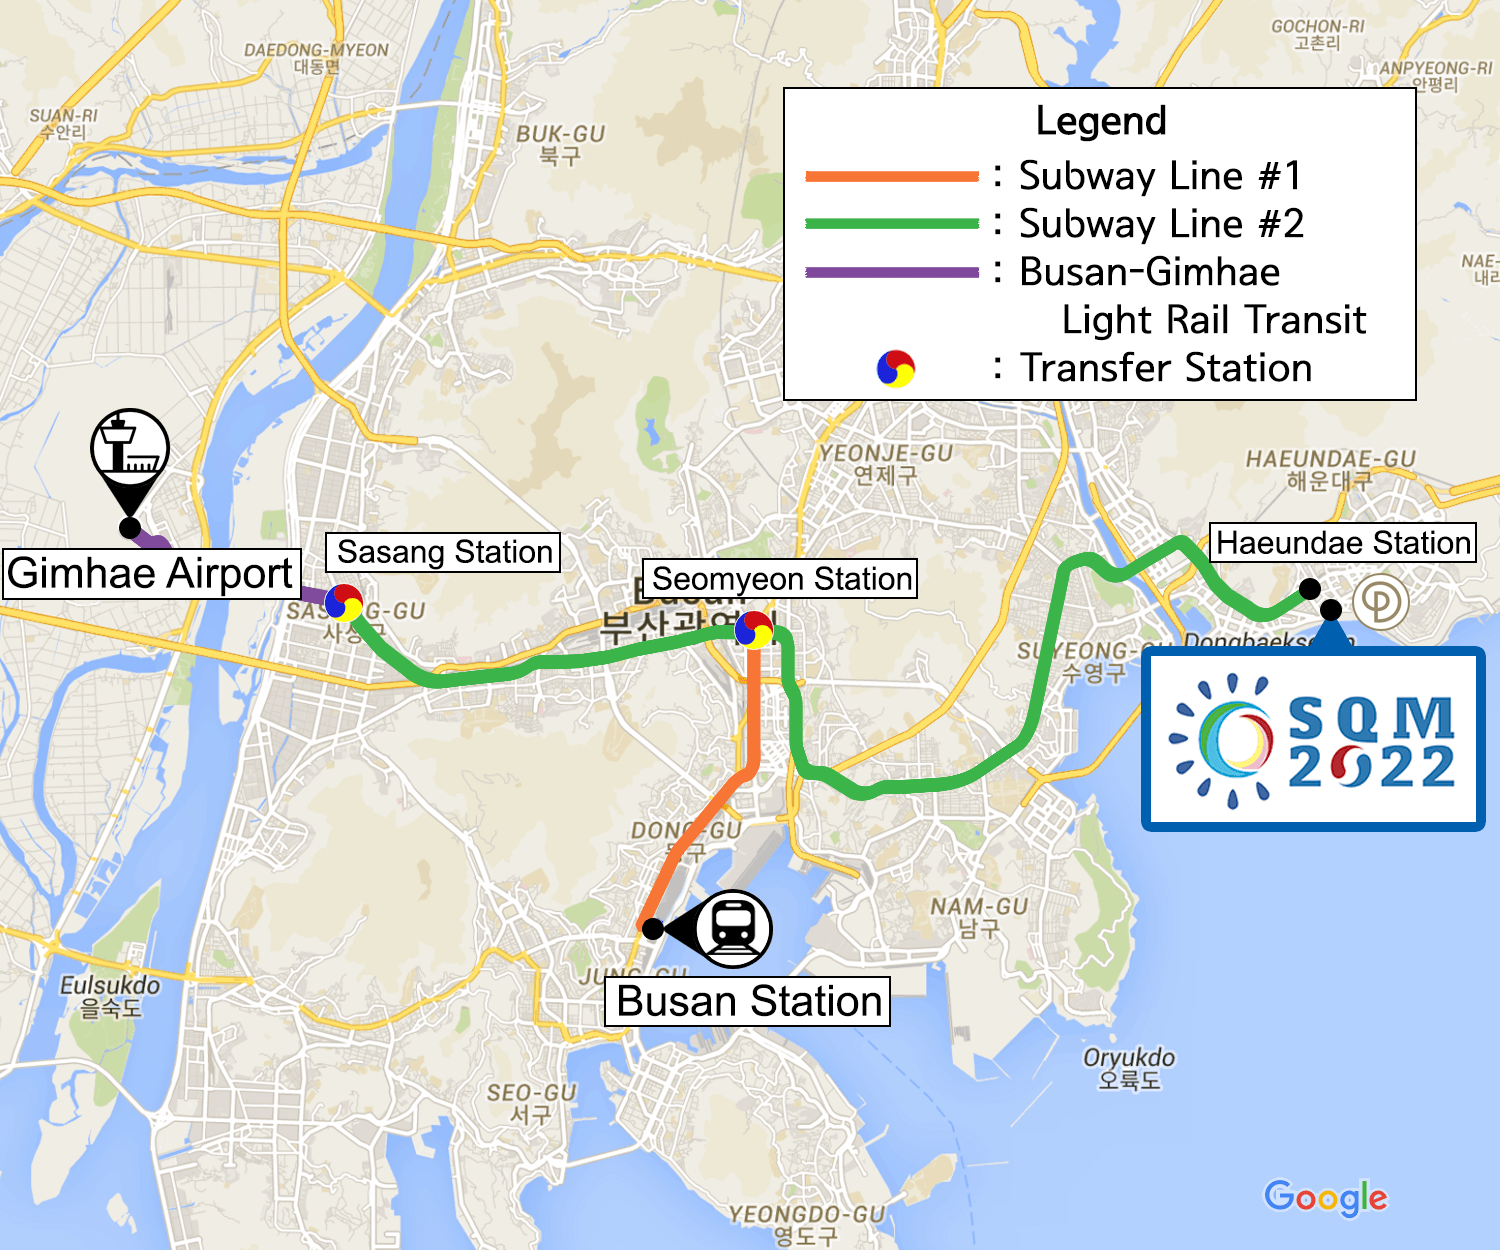 Transports in Busan